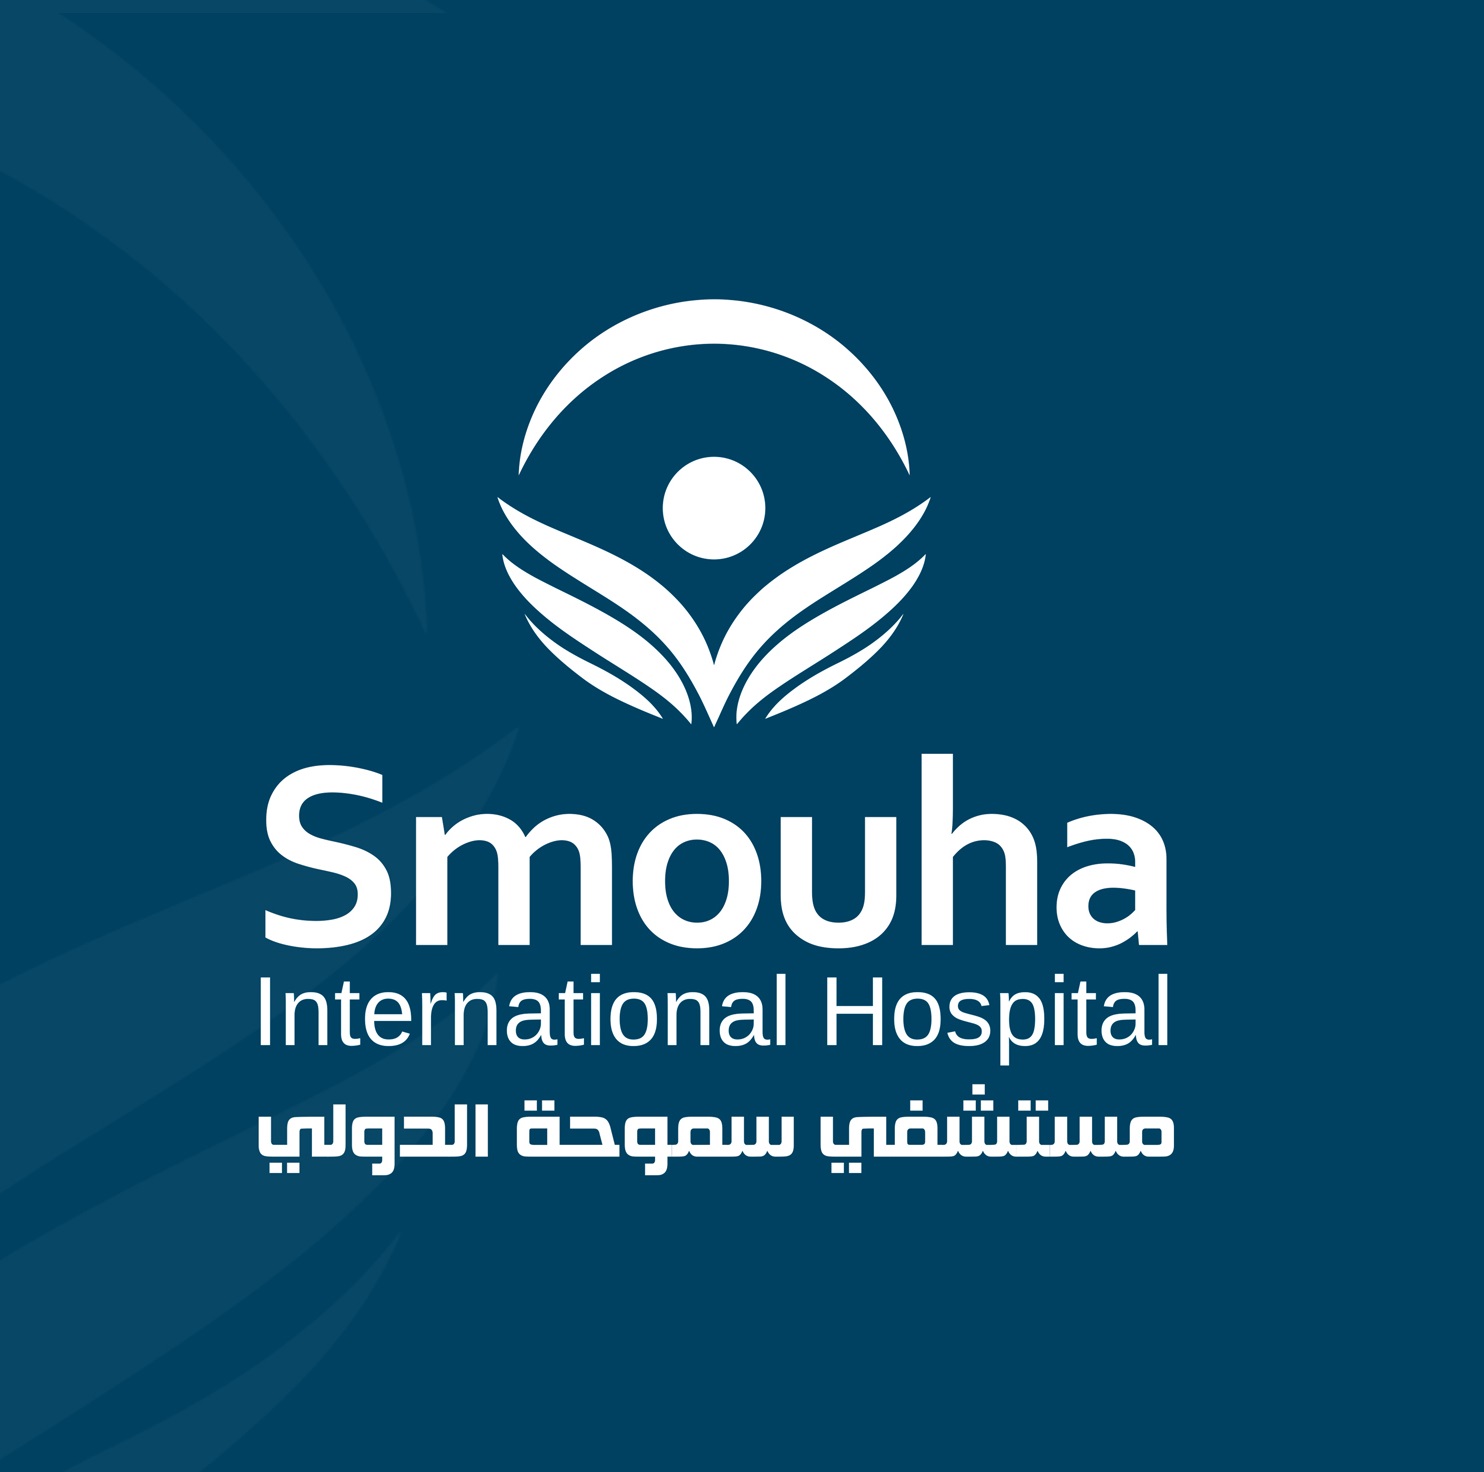 Smouha International hospital